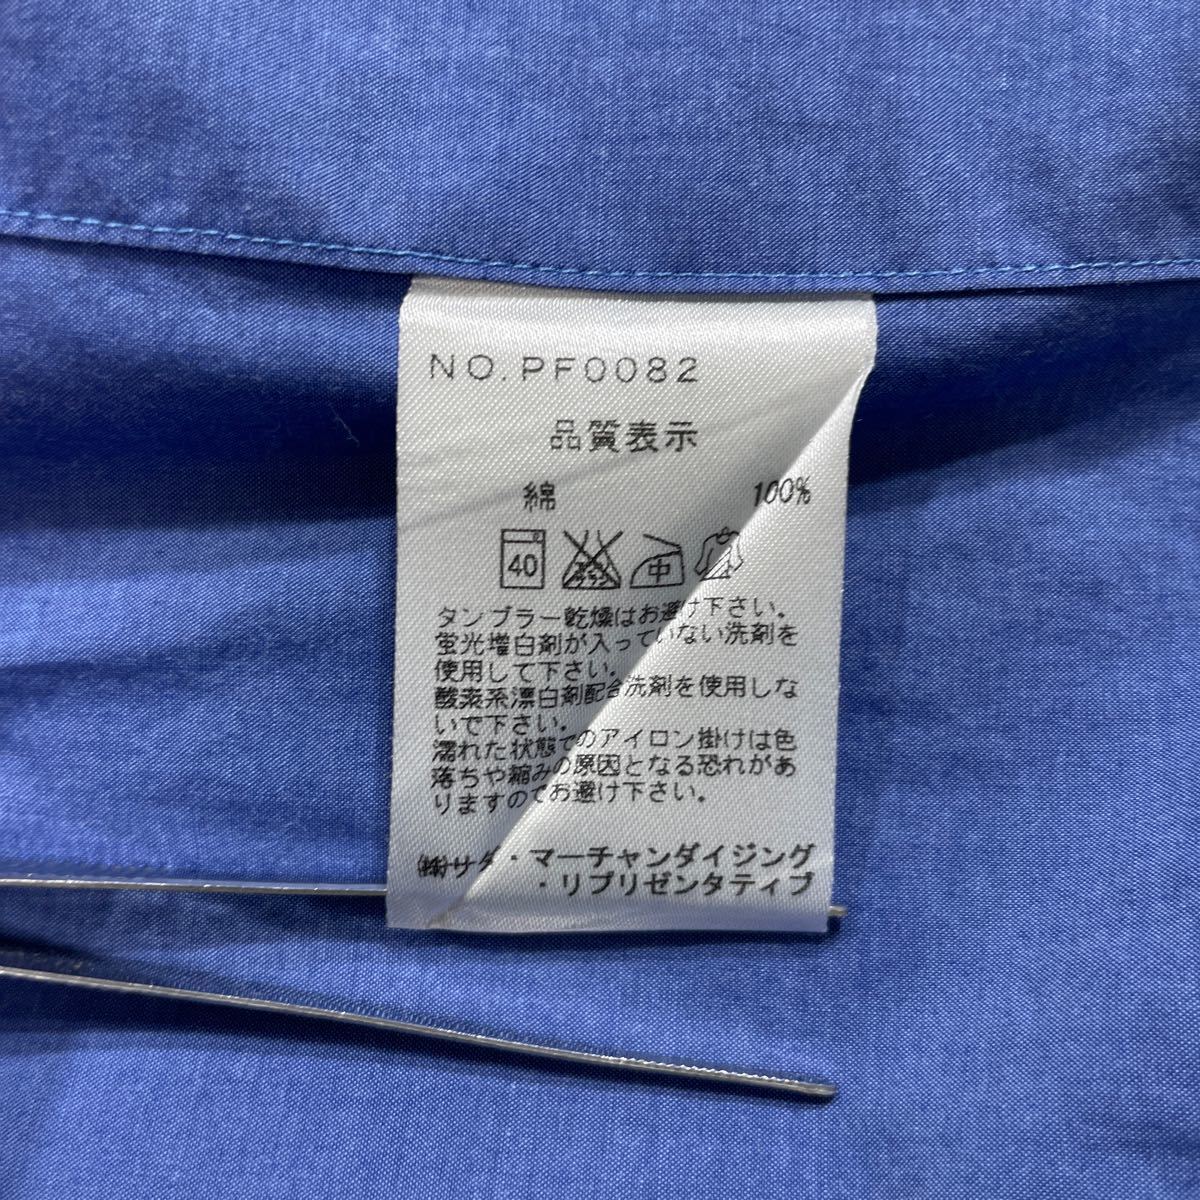 267 Maker's Shirt 鎌倉 メーカーズシャツ カマクラ 長袖 ワイシャツ 日本製 ビジネス オフィス コットン メンズ 無地 ブルー 青 40116O_画像6